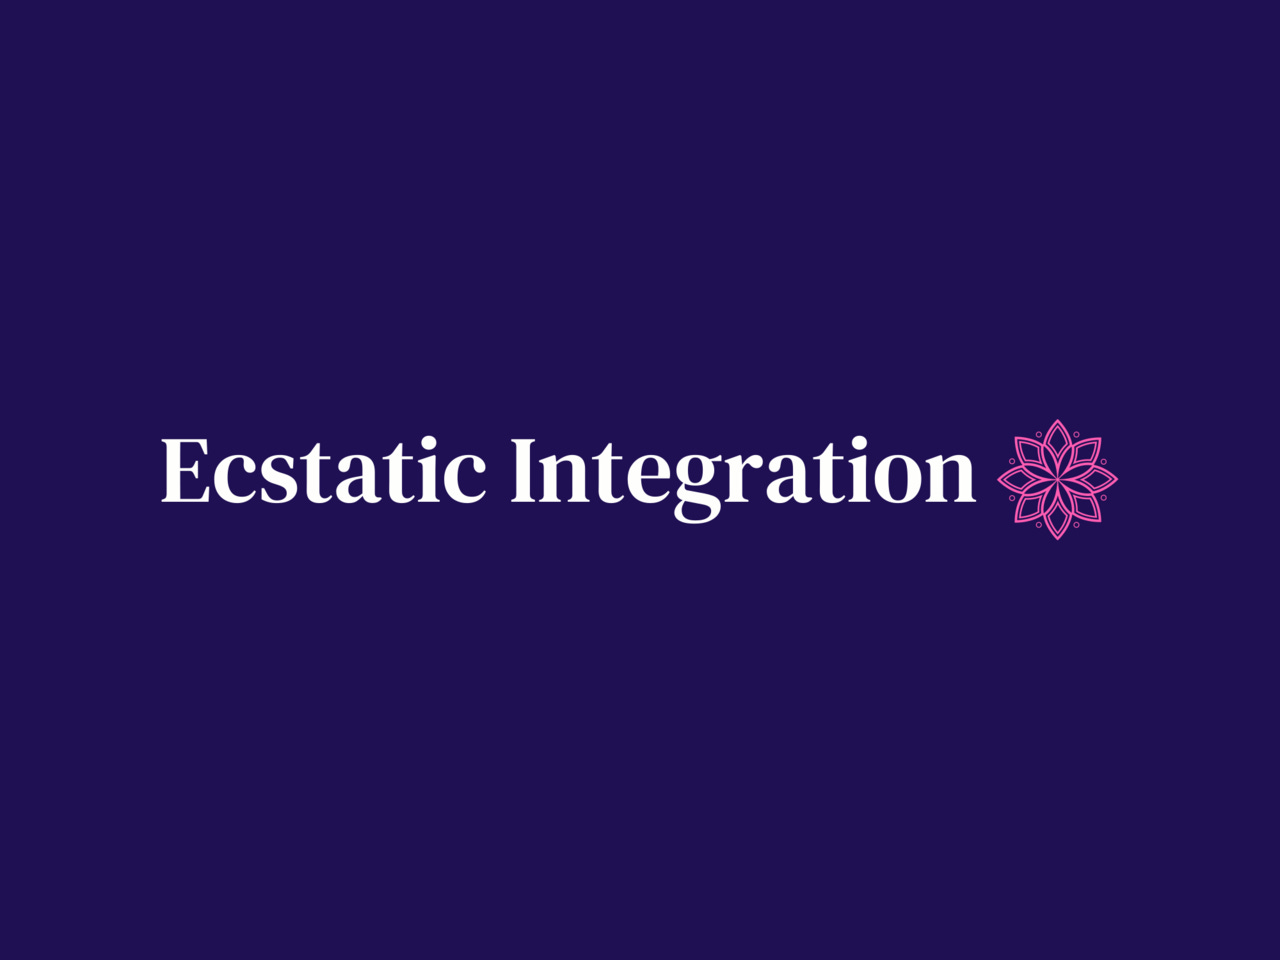 Ecstatic Integration